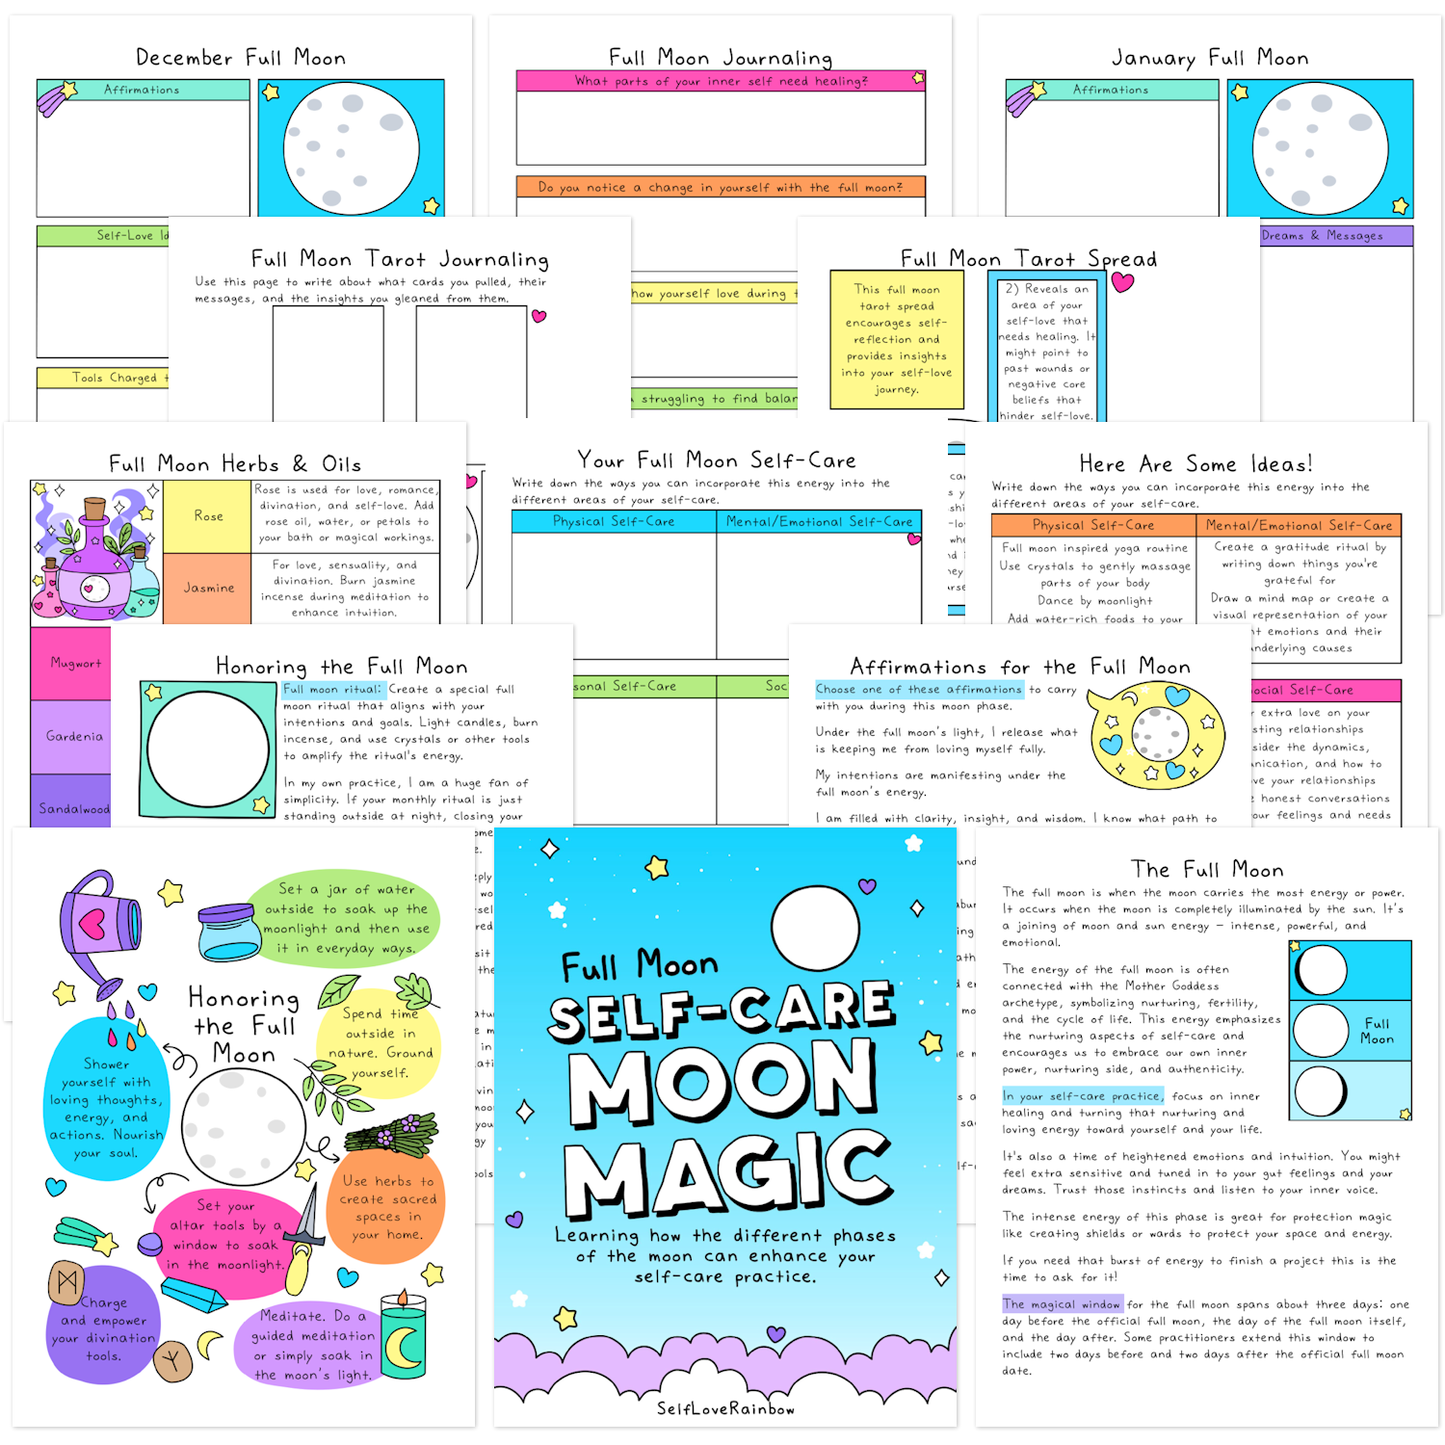 Full Moon Self-Care Guide